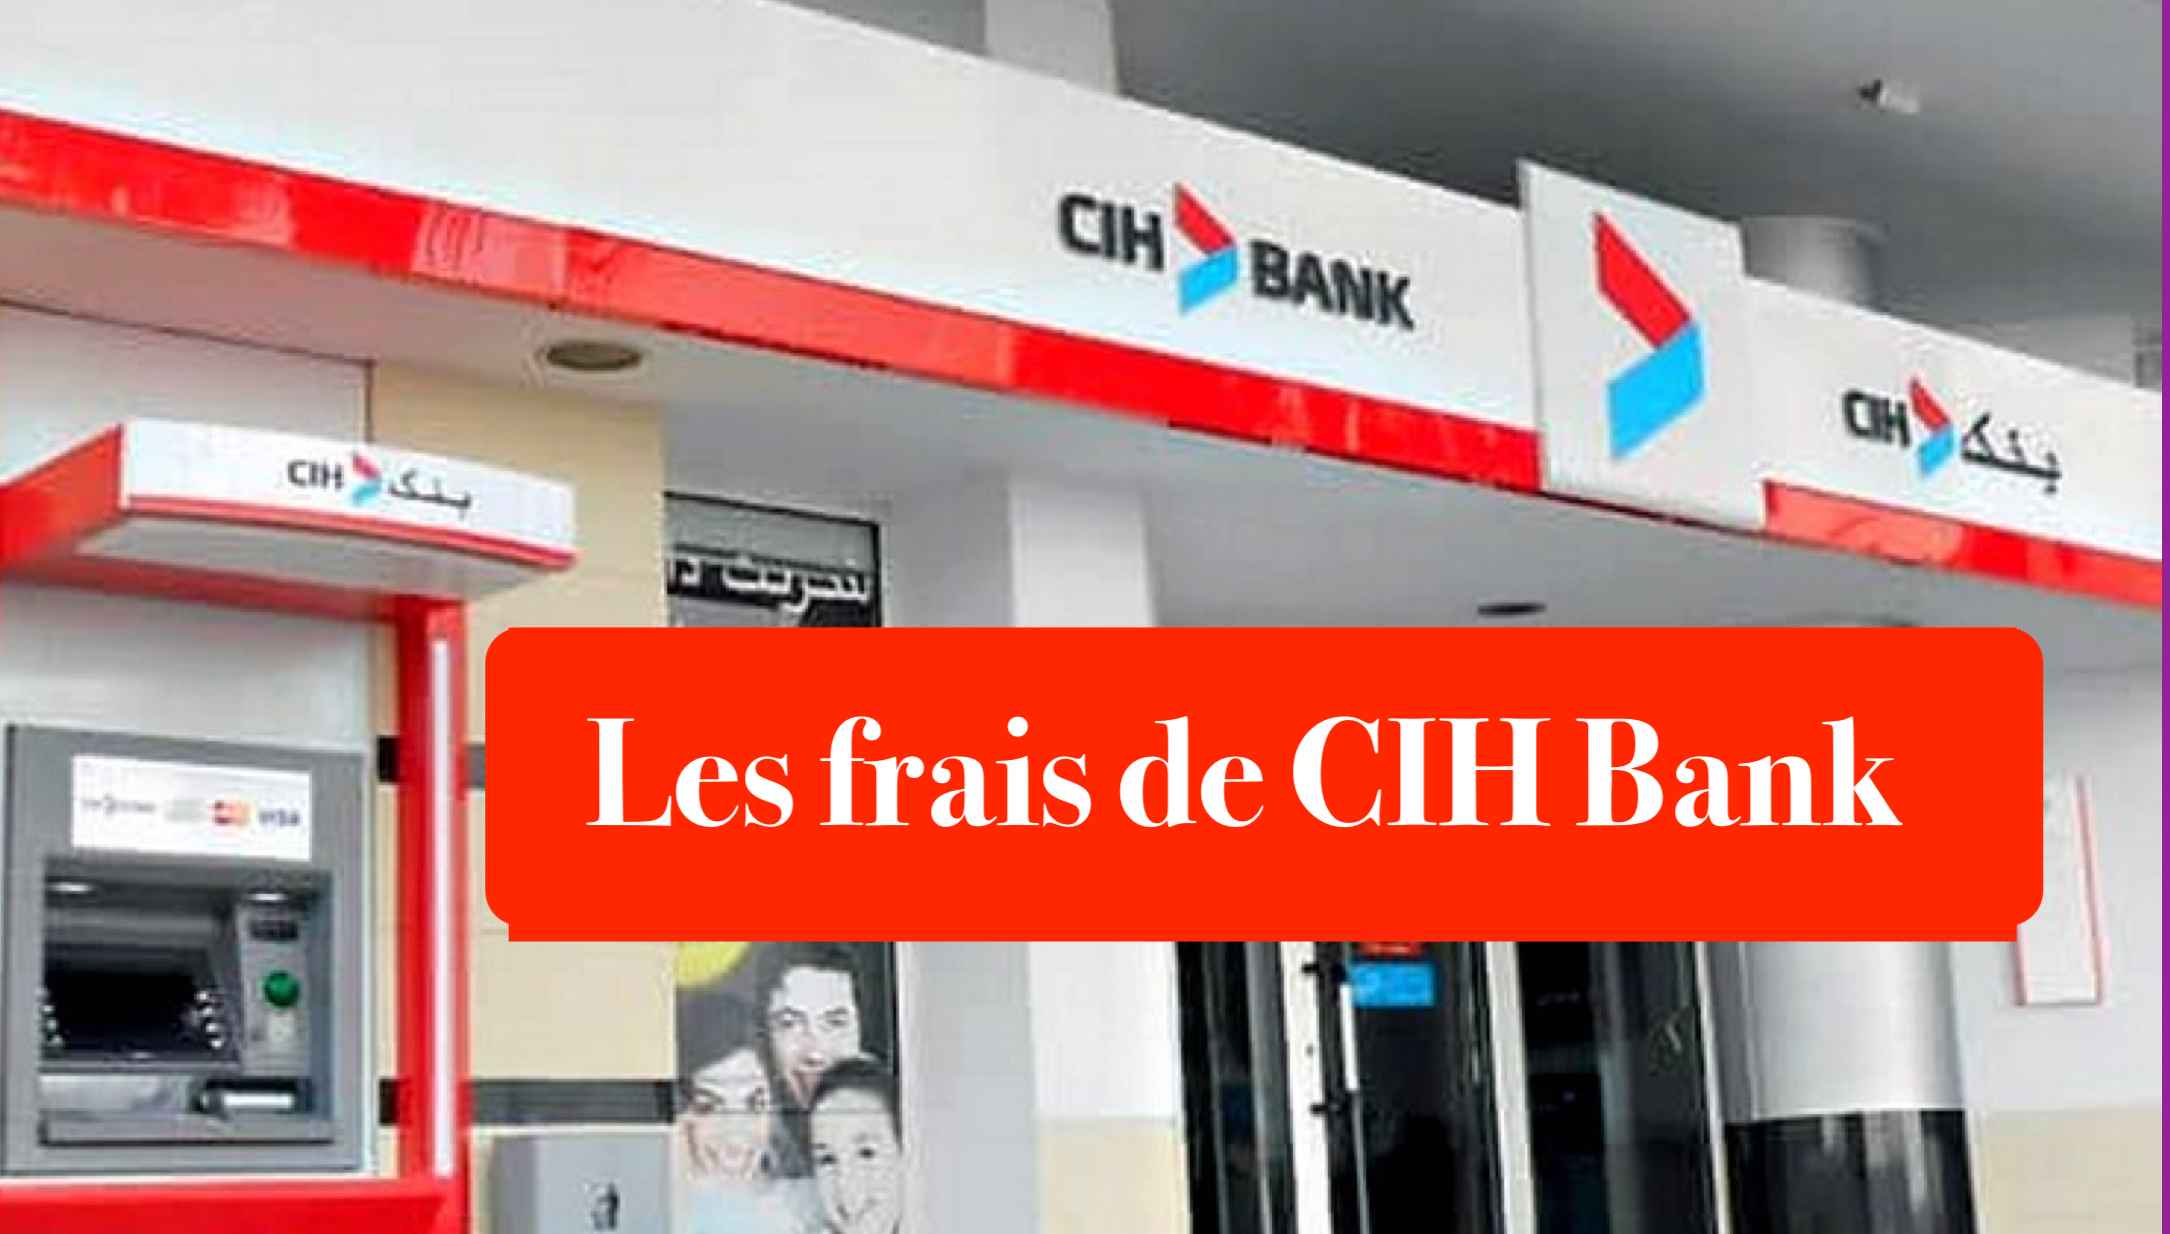 Les frais de CIH Bank